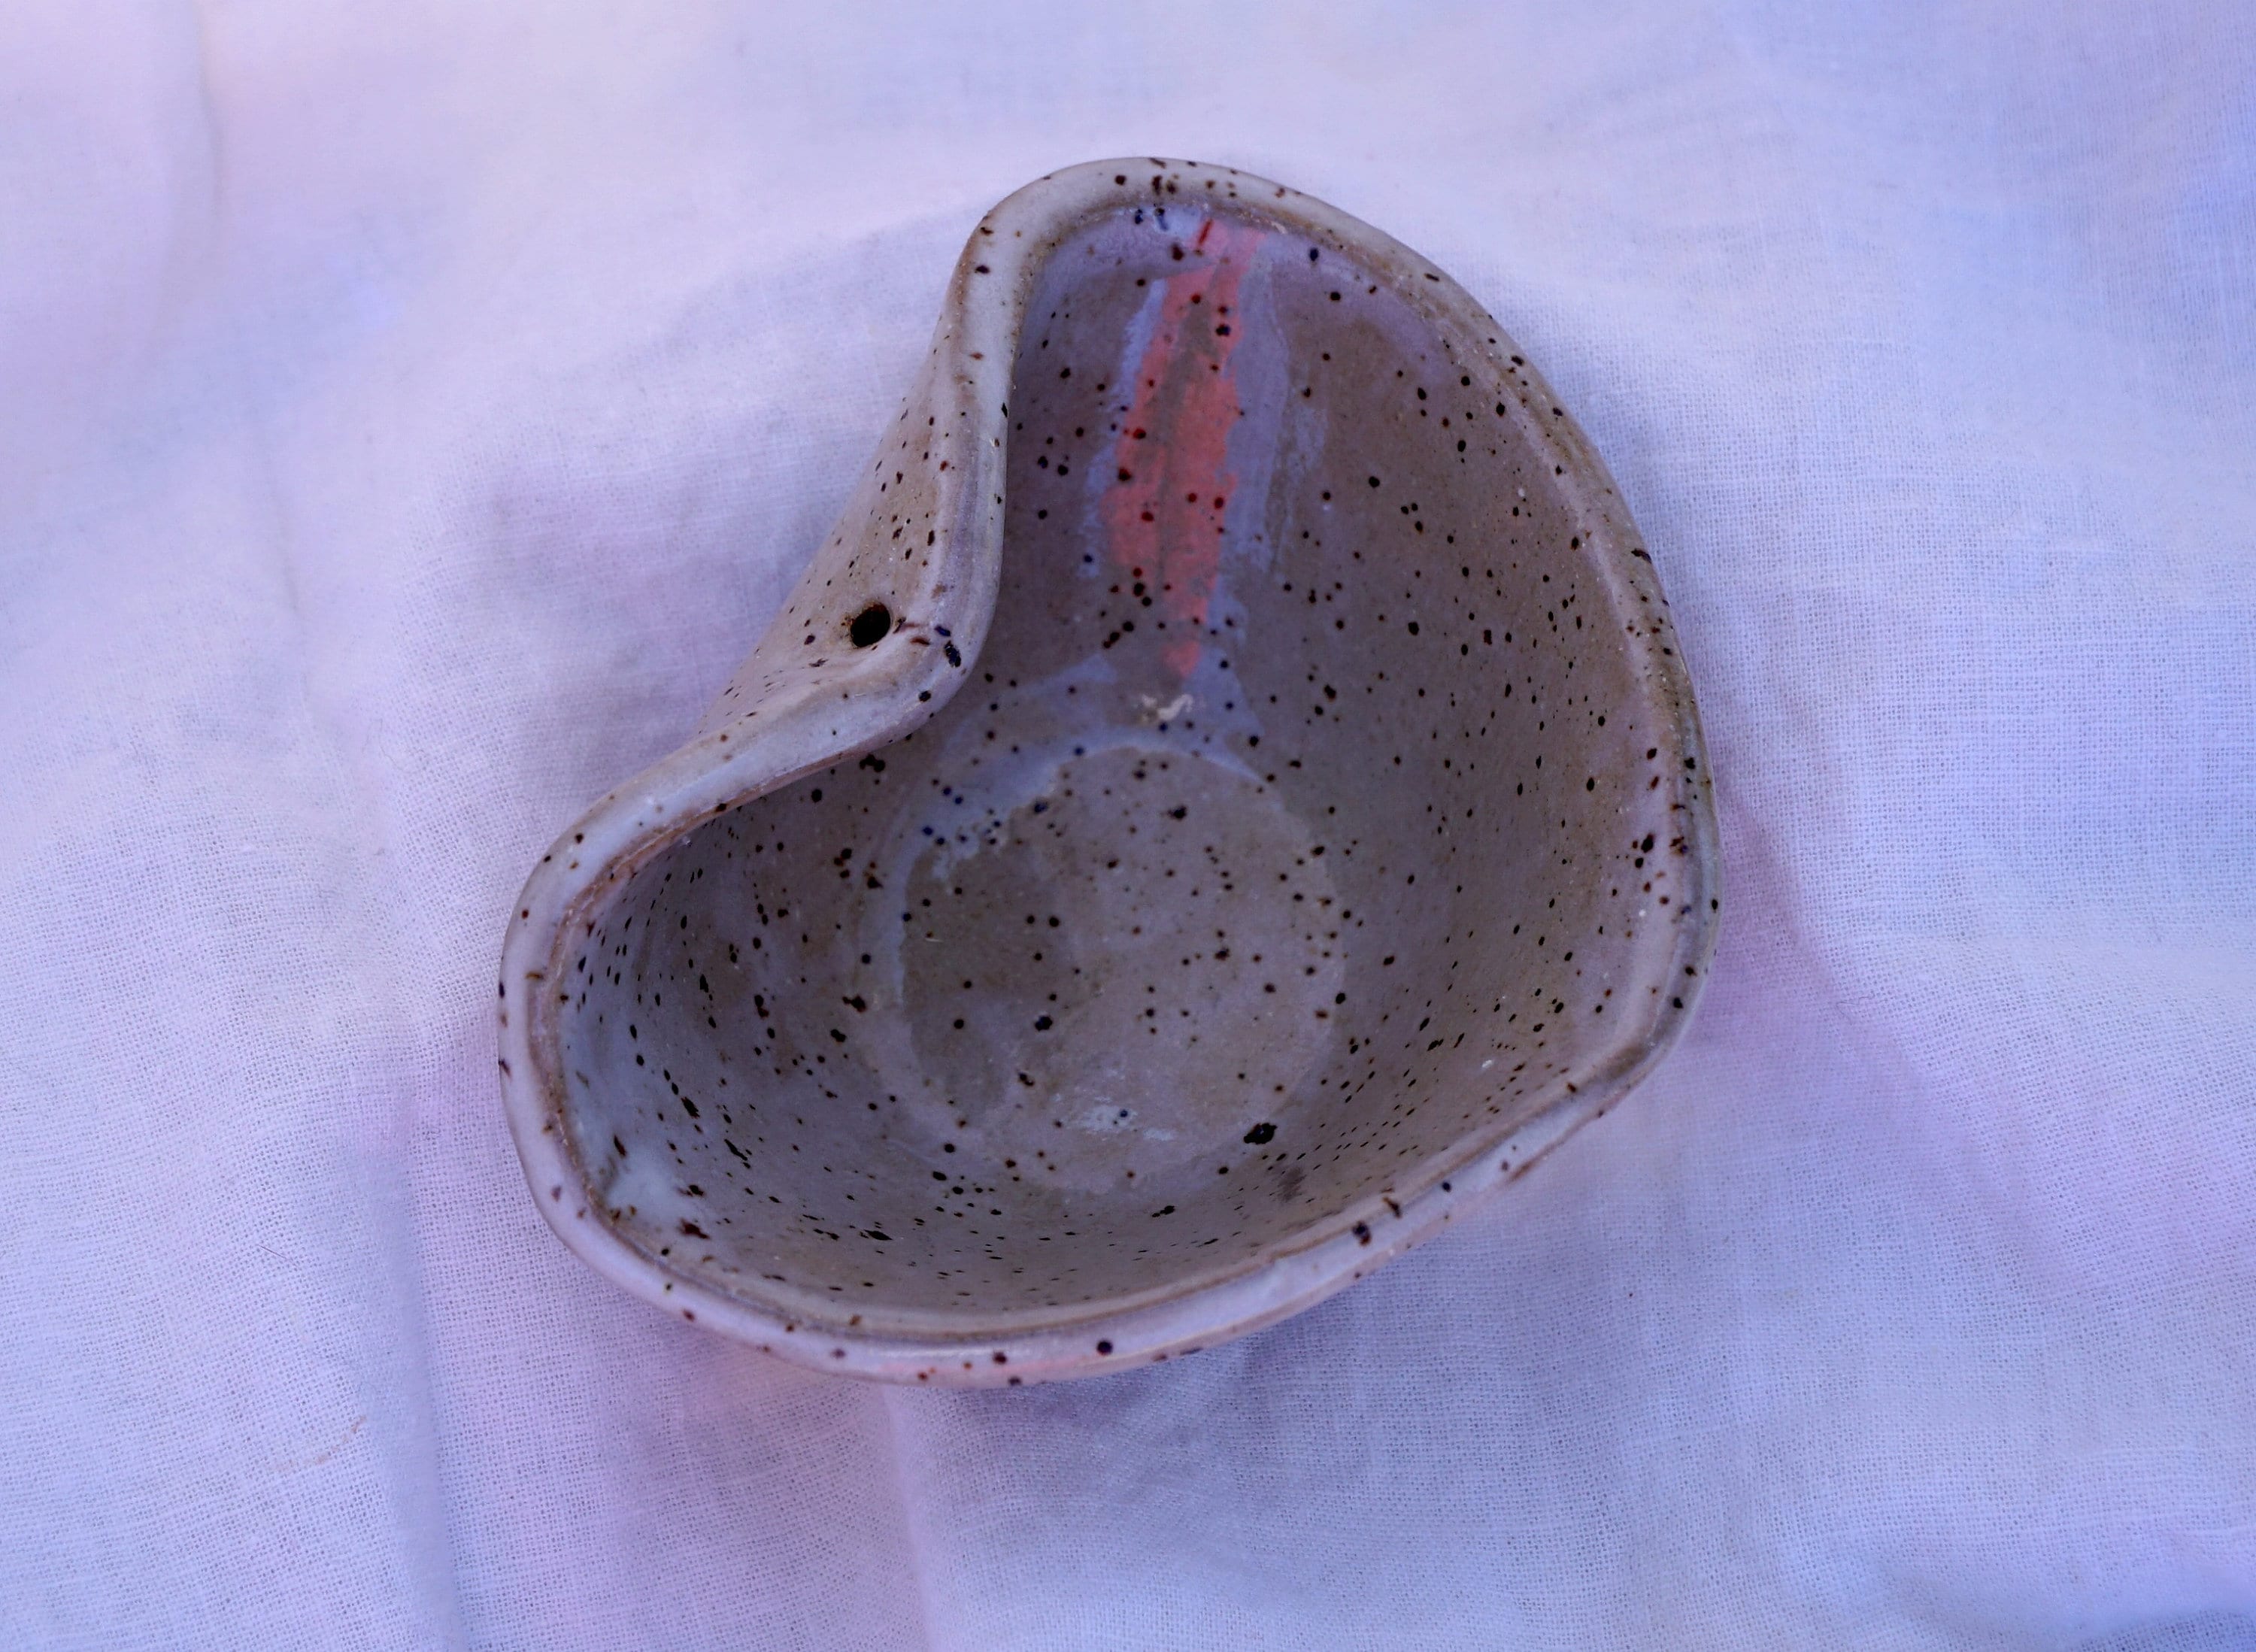 Stoneware Incense Bowl - Heart Shaped Bowl with Incense Holder - Tea Light Votive - Small Bowl - Incense Dish - White Ceramic Heart Dish